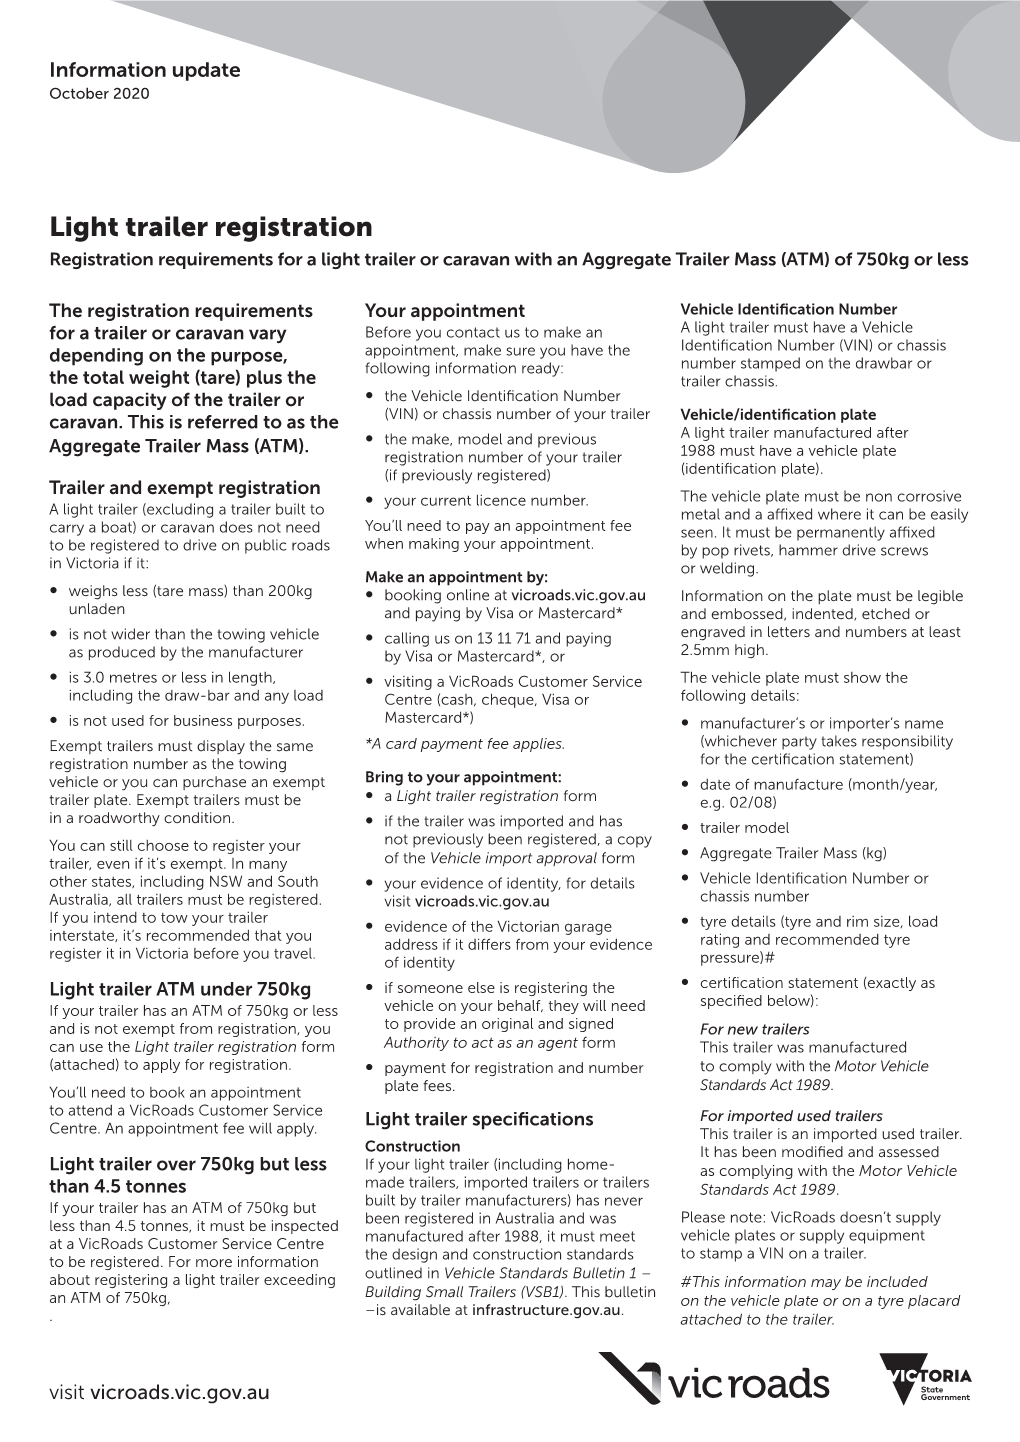 Light Trailer Registration Form E.G